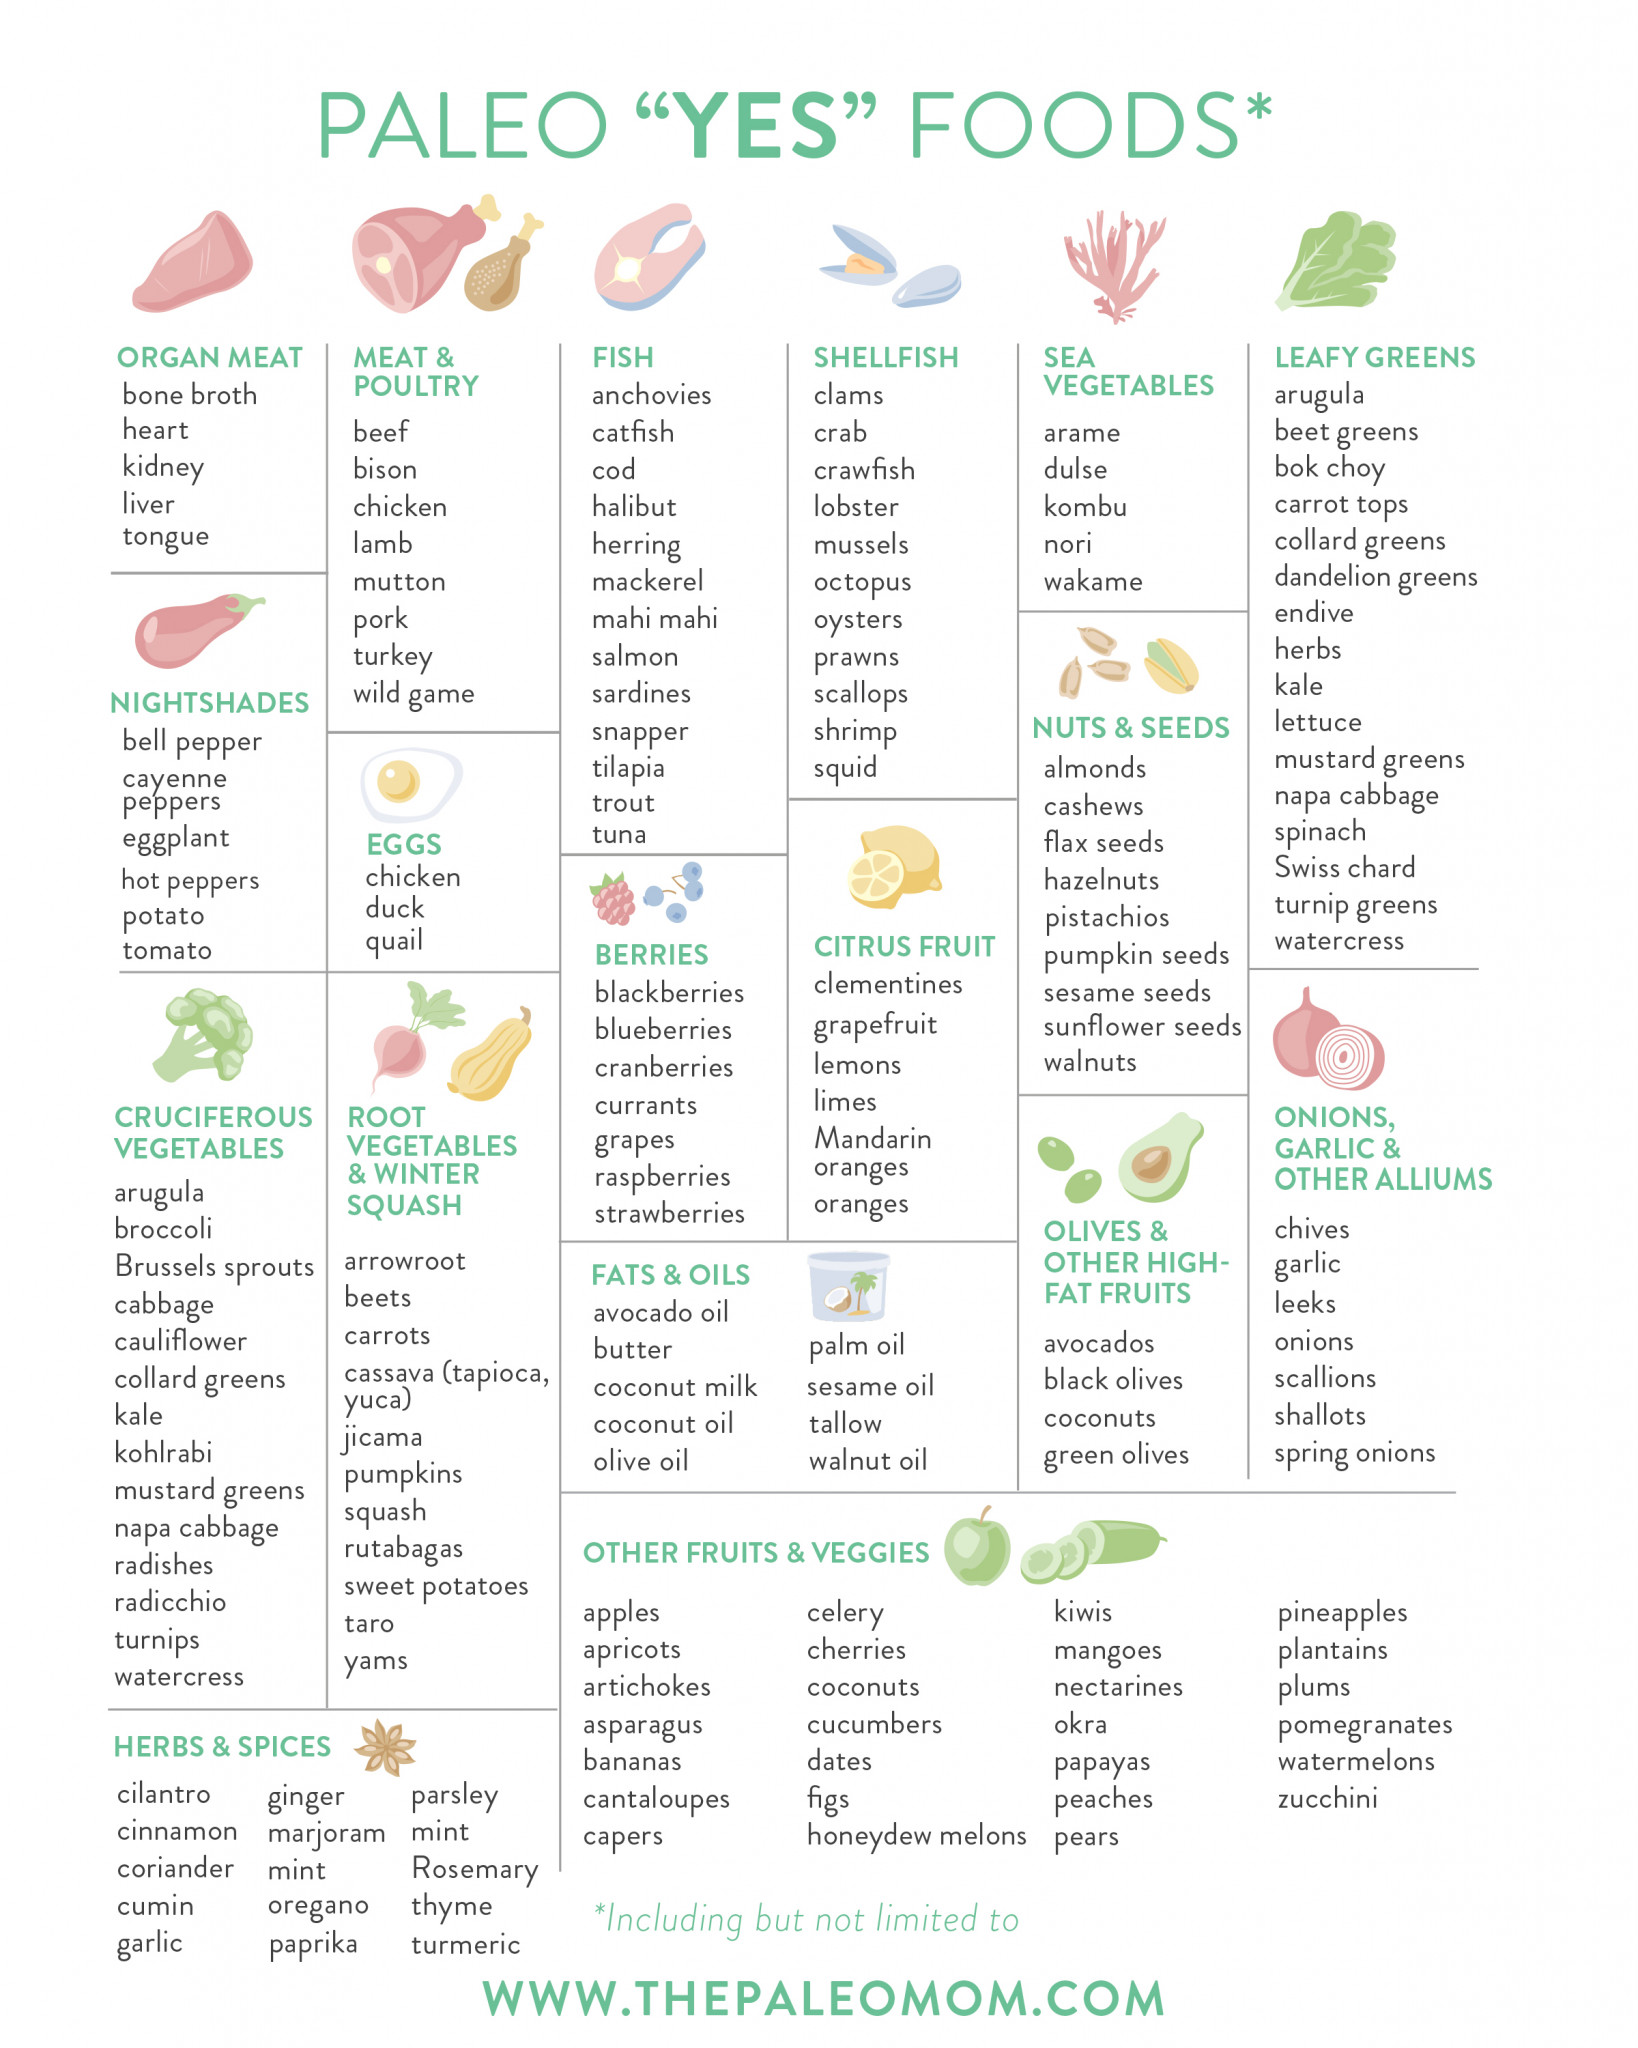 Paleo diet vegetables